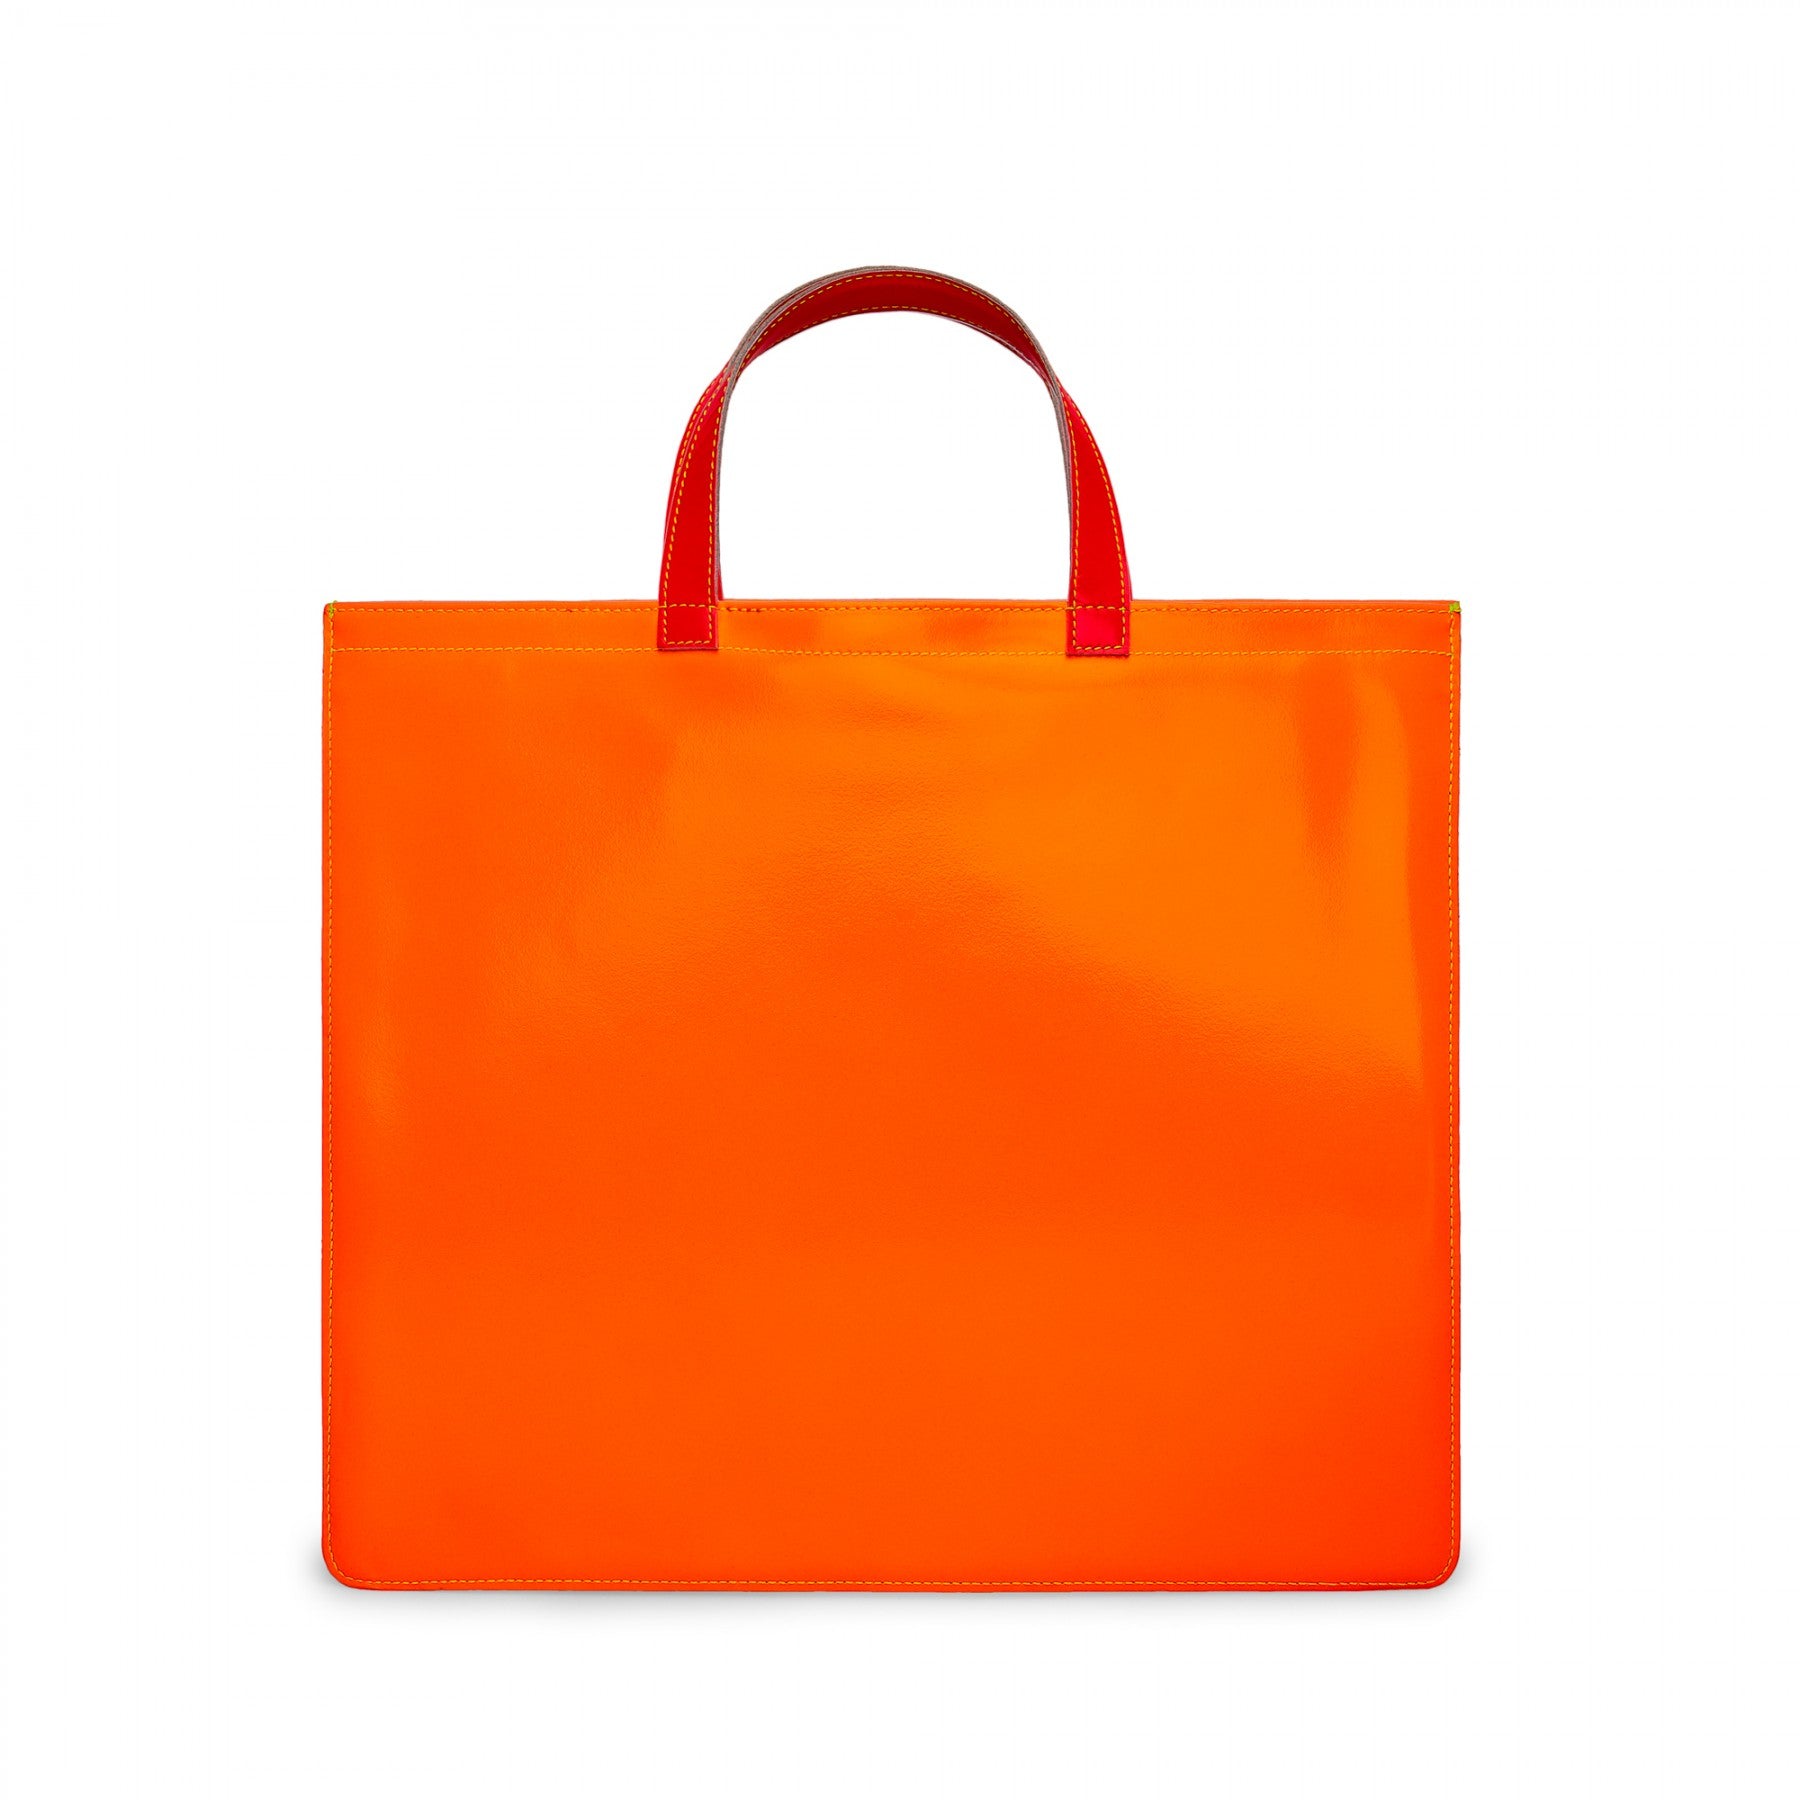 CDG Wallet - Super Fluo Tote Bag - (Yellow/Orange) view 3